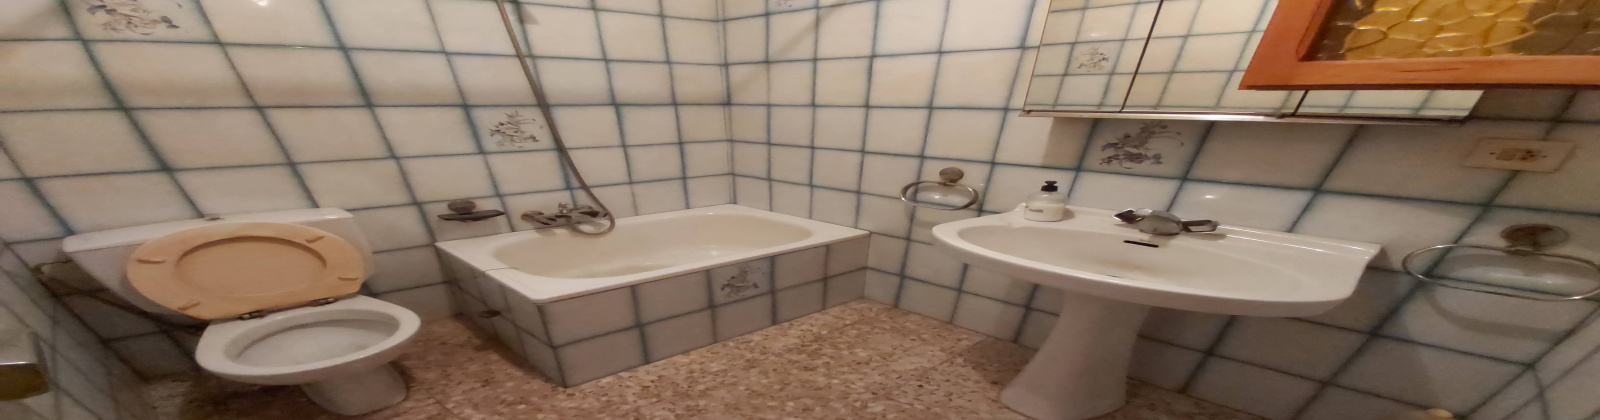 baño valdealgorfa